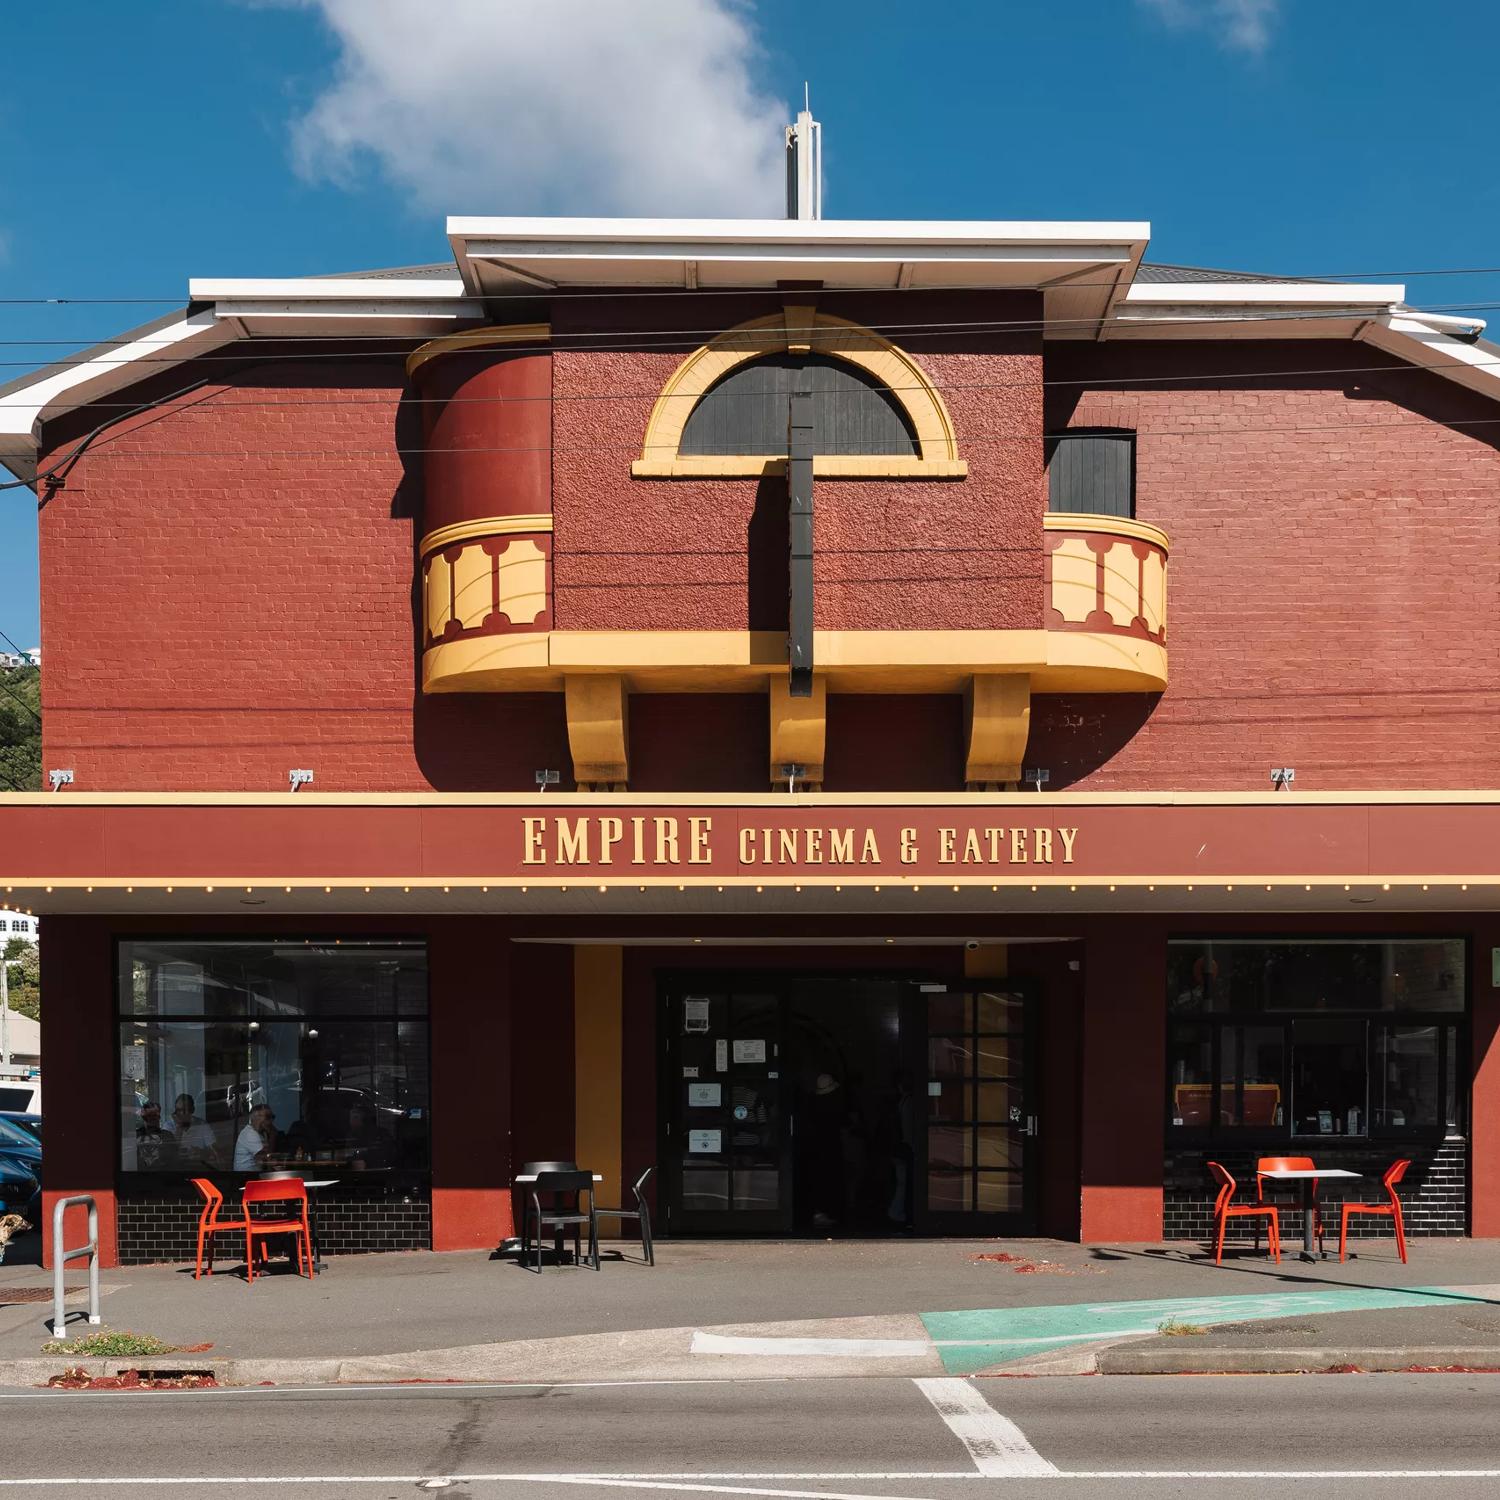 The front facade of Empire Cinema & Eatery in Island Bay, Wellington.